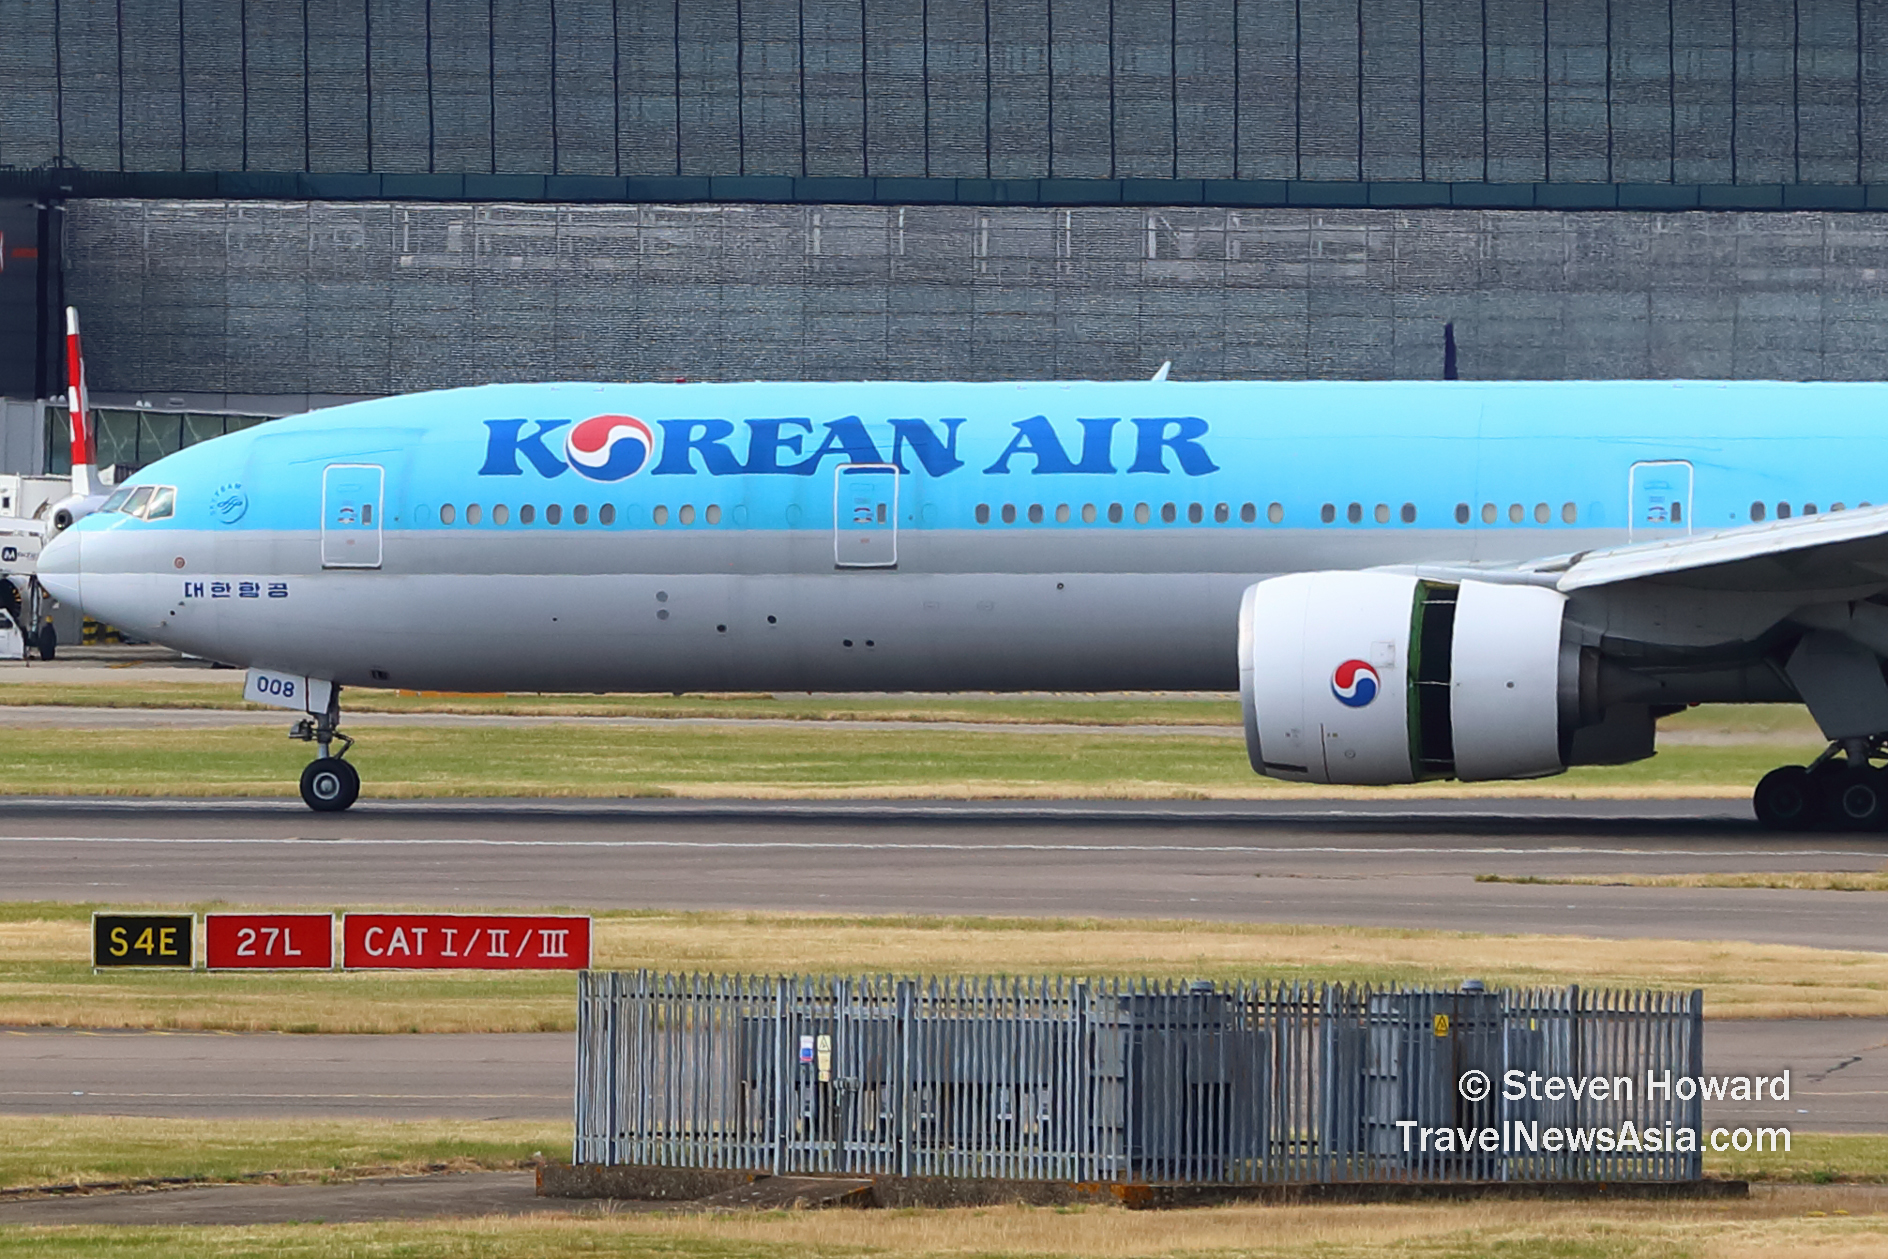 Korean Air Boeing 777-300ER reg: HL8008 at LHR in June 2023. Picture by Steven Howard of TravelNewsAsia.com Click to enlarge.